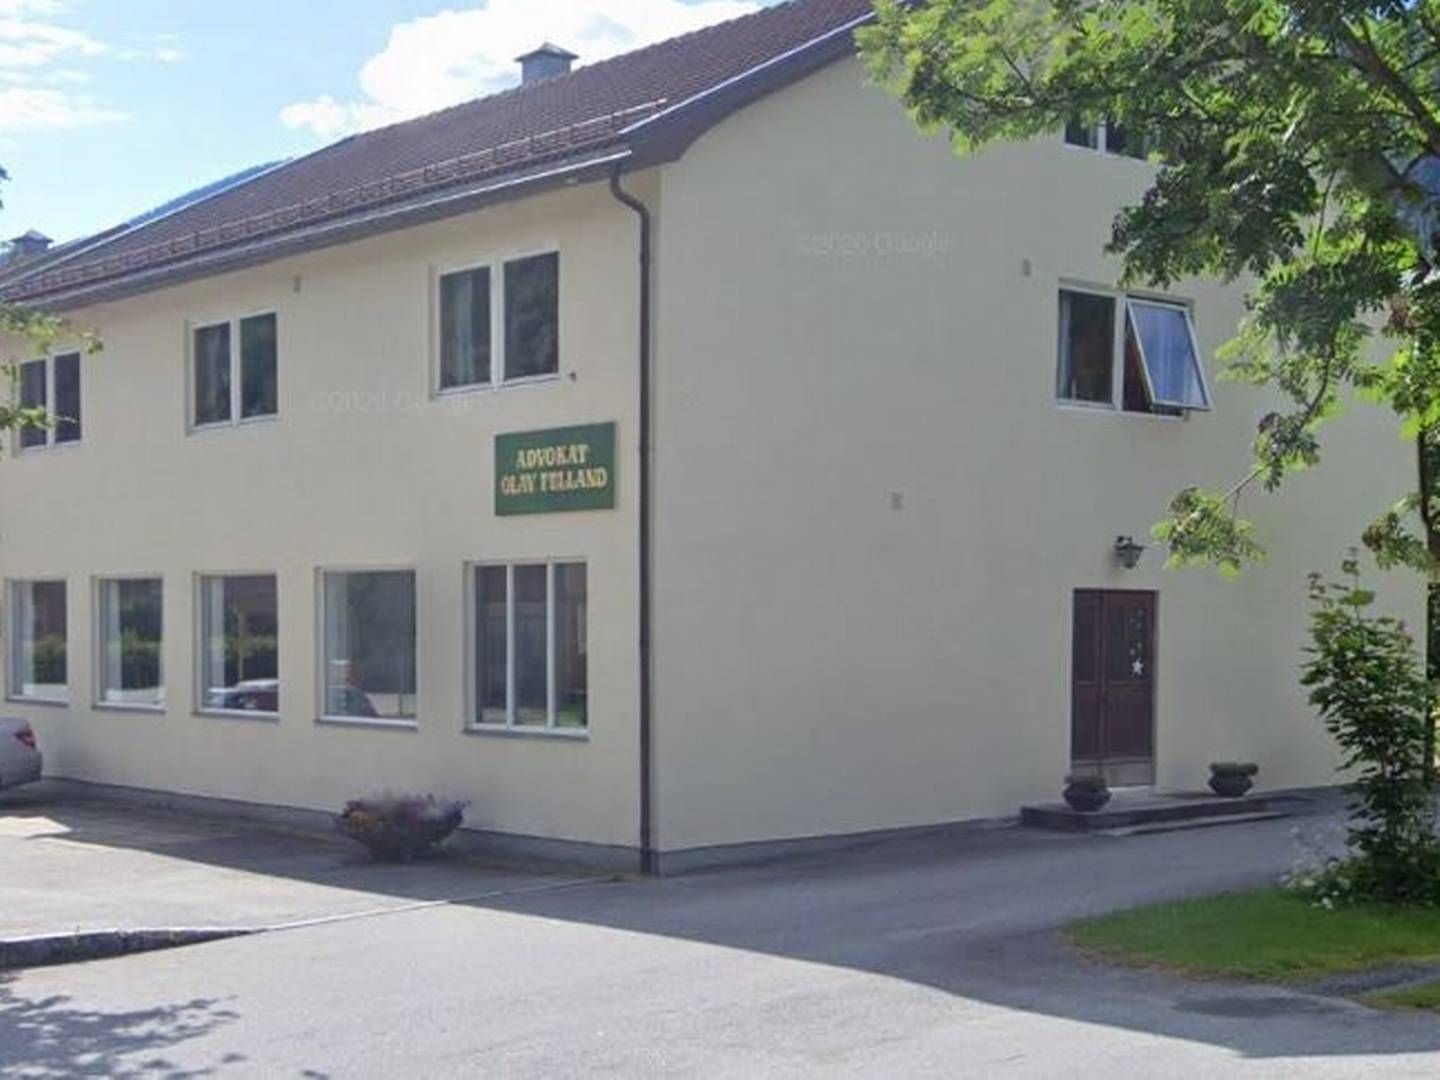 Felland Advokatfirma holder til i Hotellvegen i Dalen i Telemark. | Foto: Google Street View